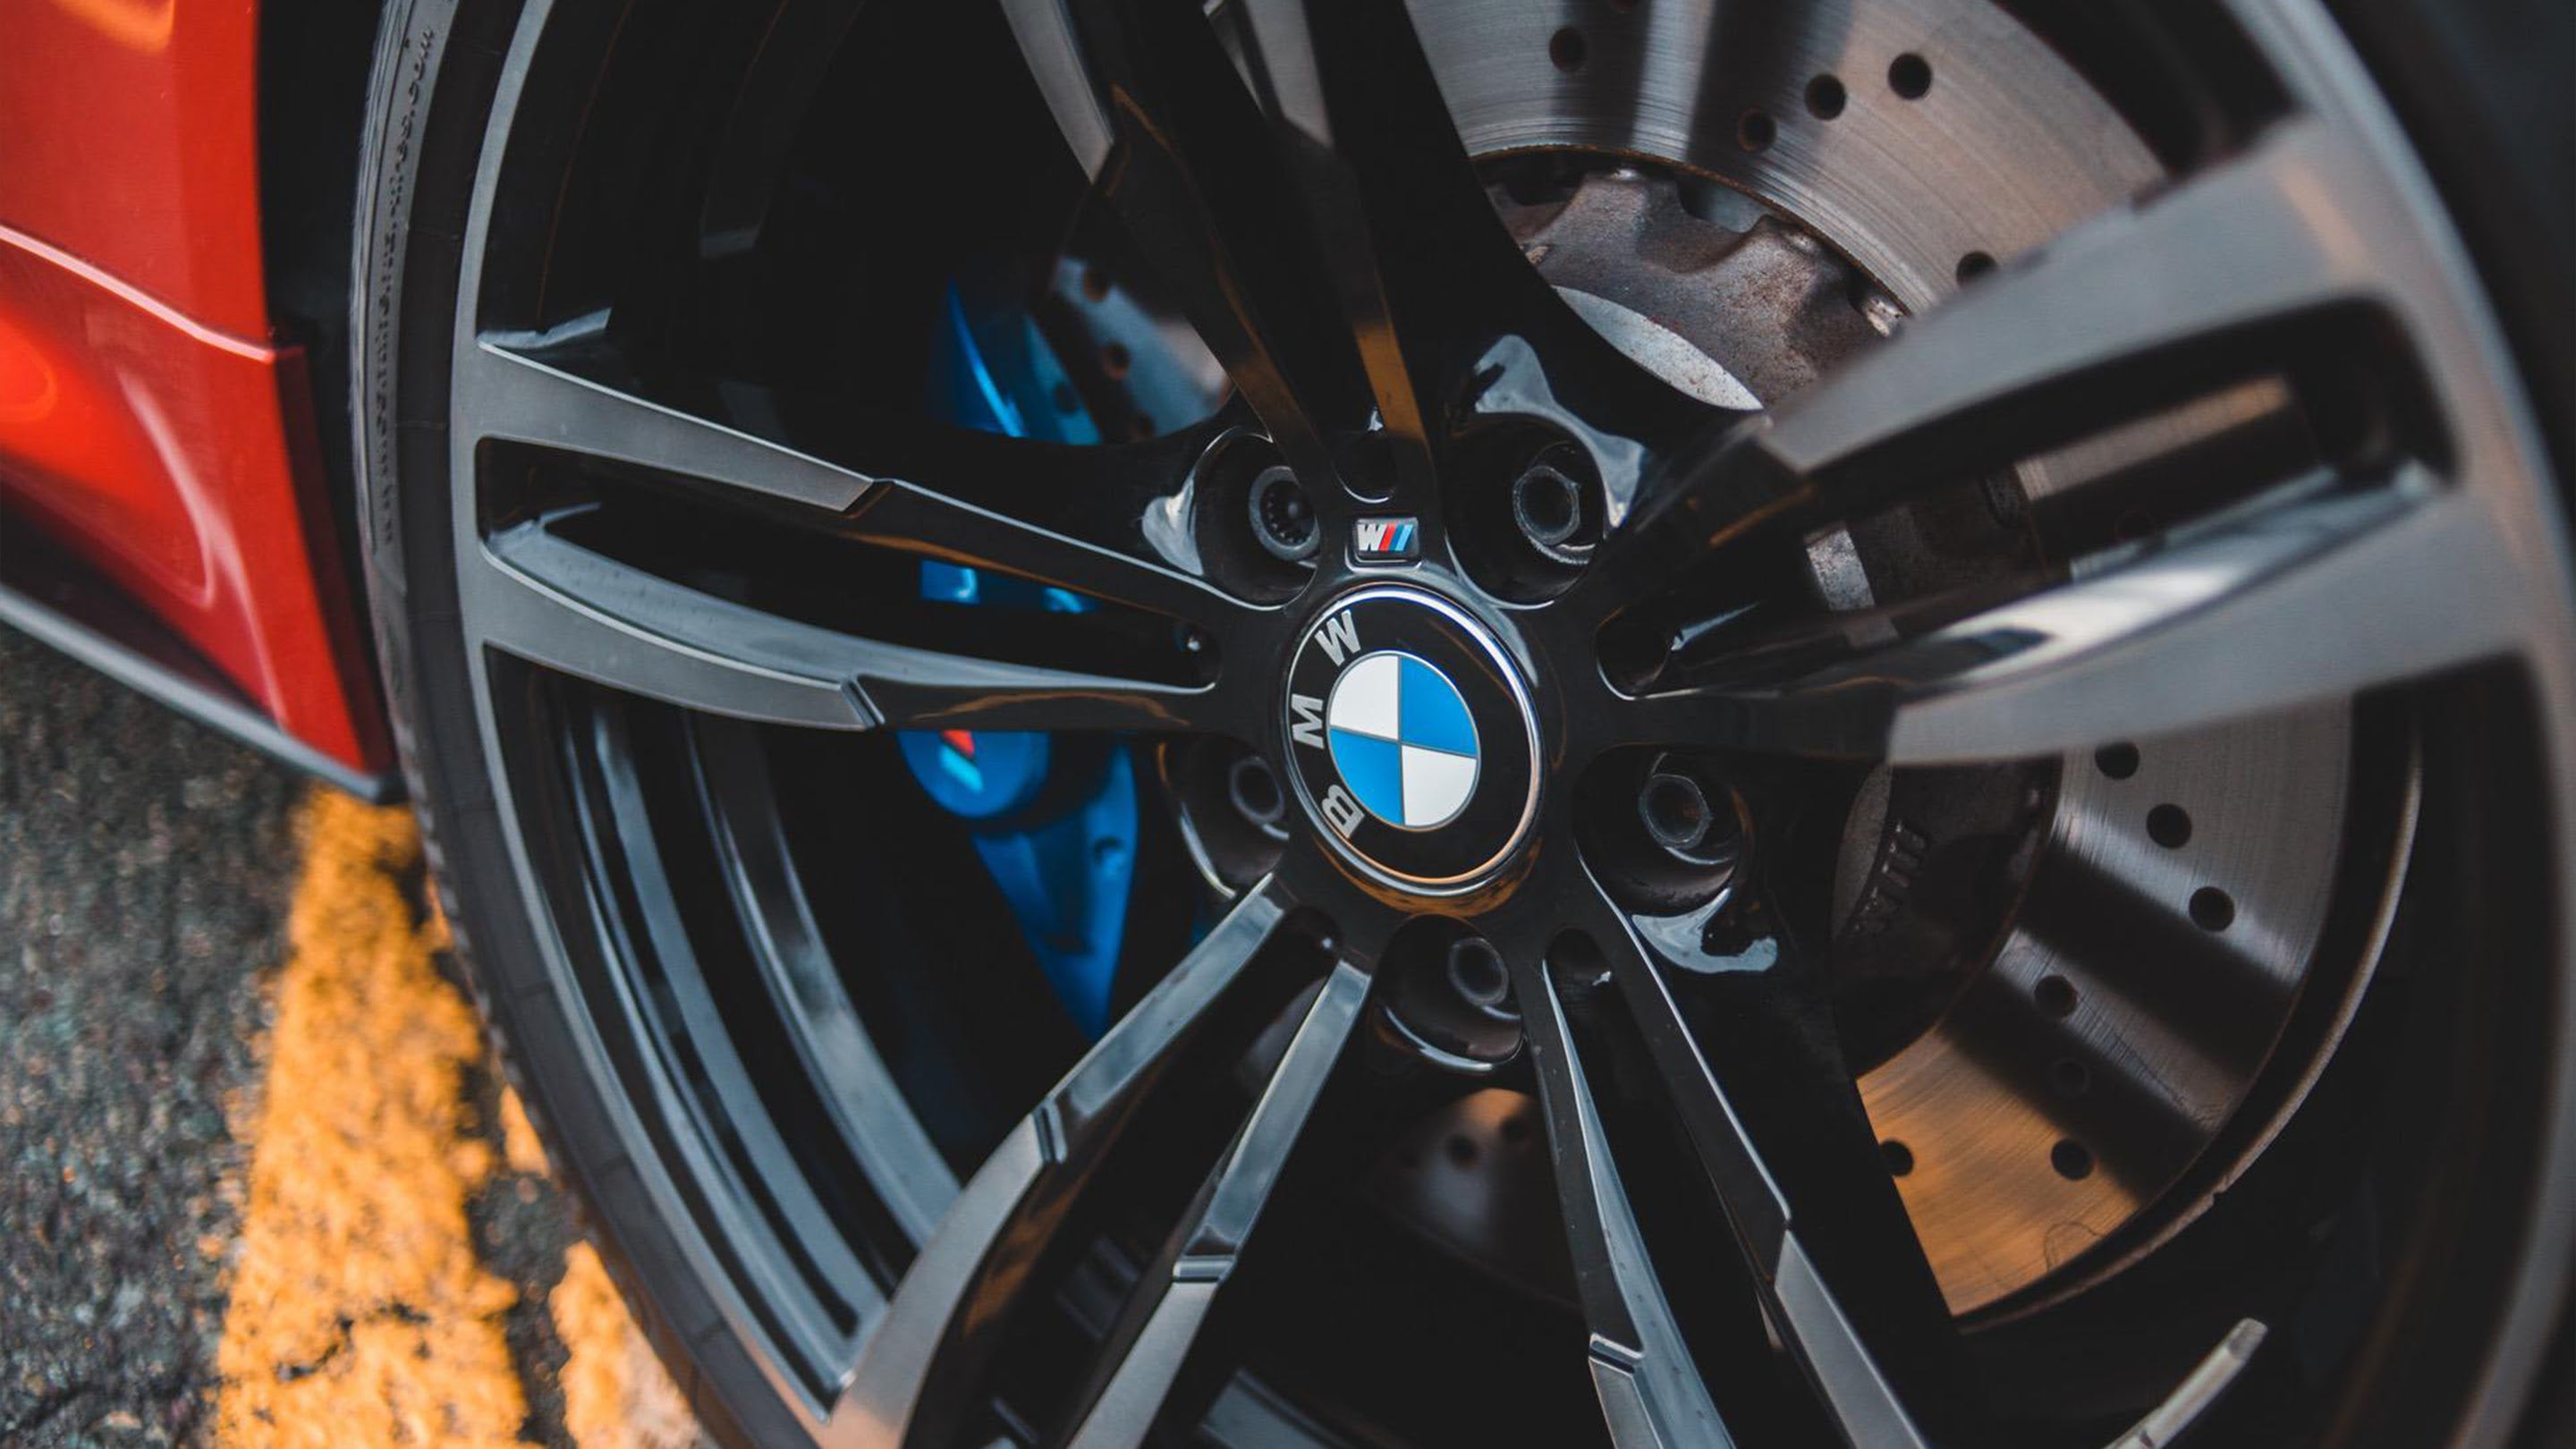 Wheel nuts visible in BMW rim